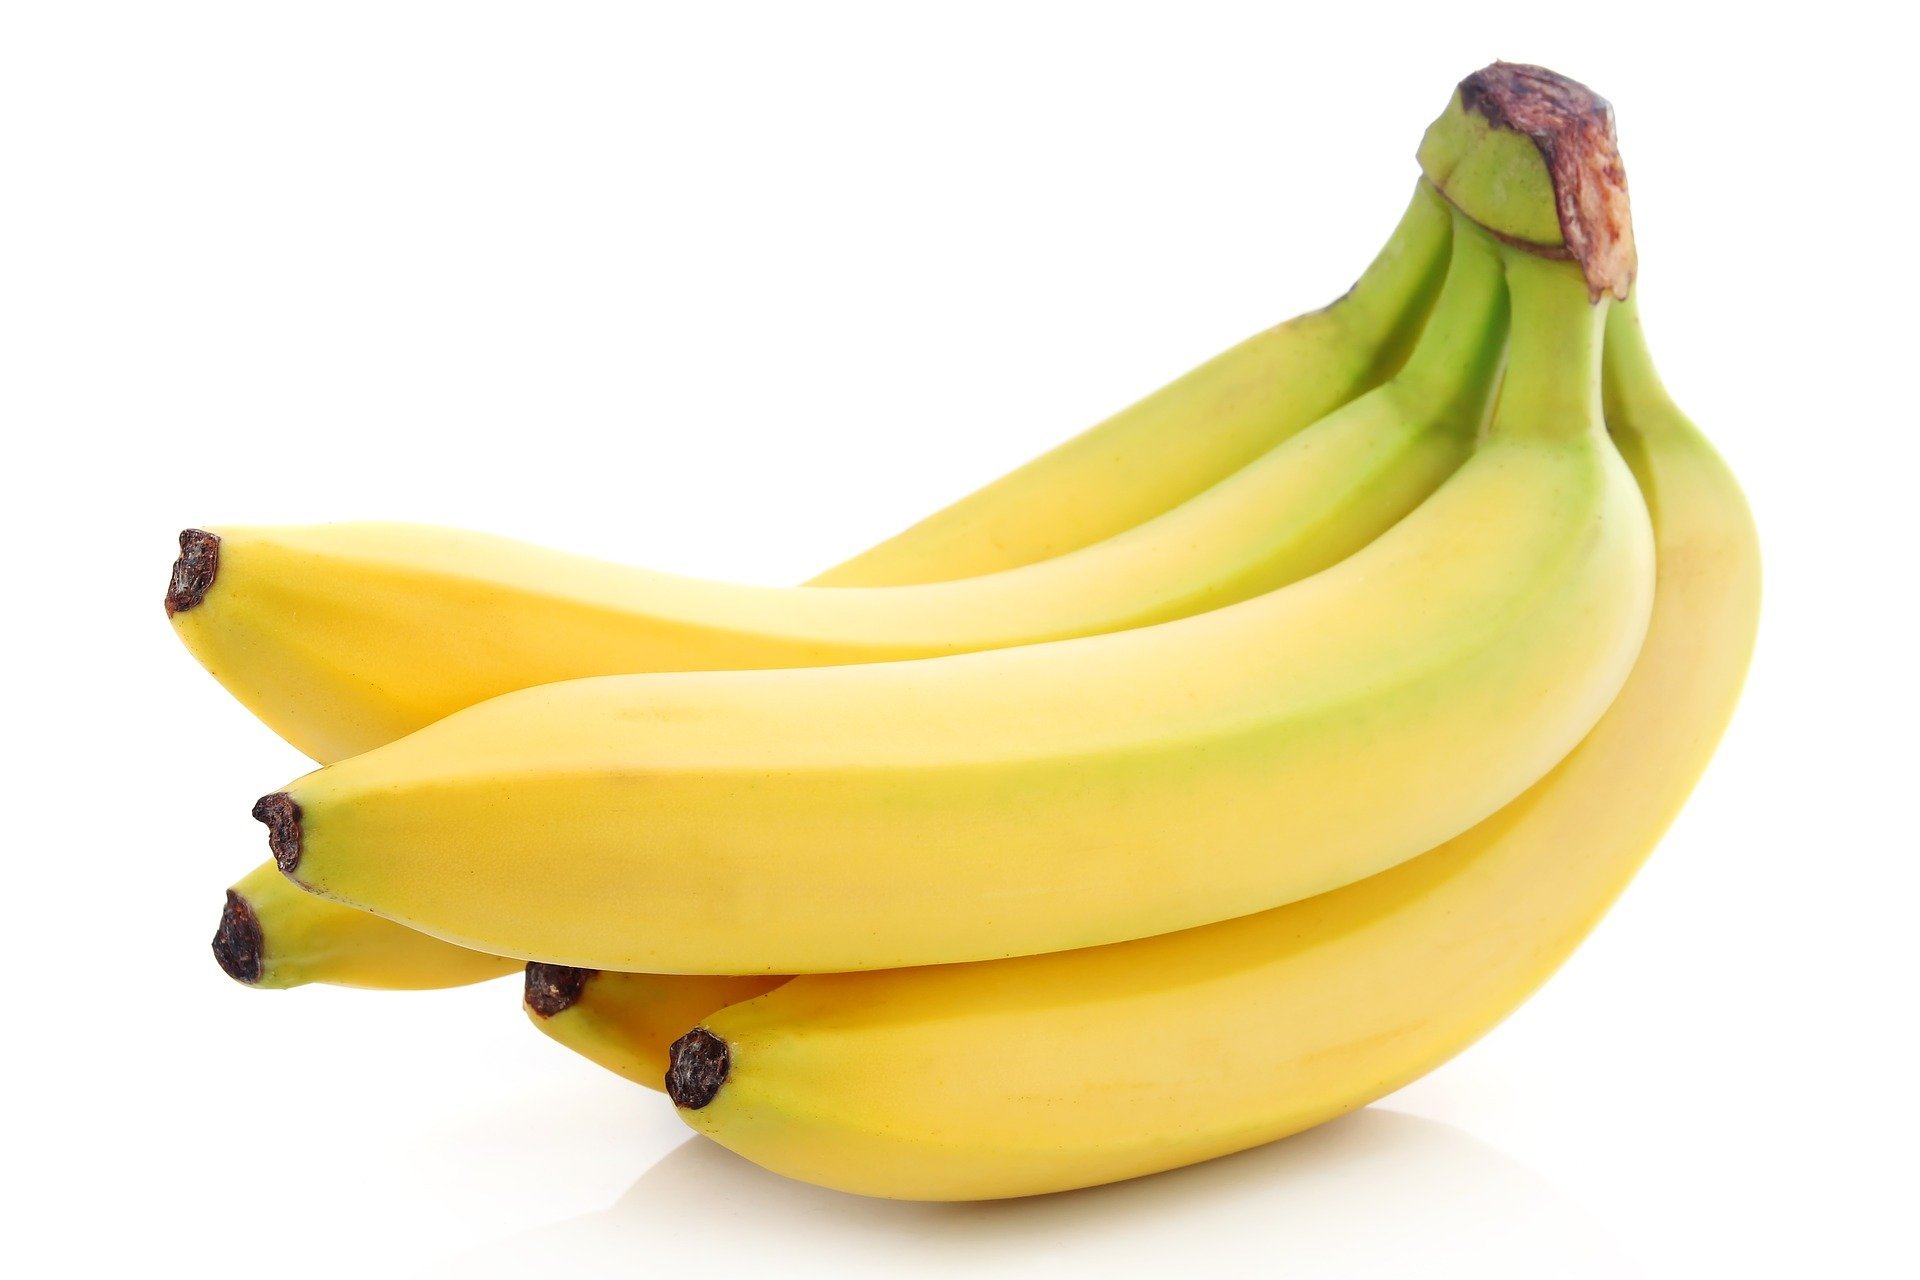 Is banana good in pregnancy?